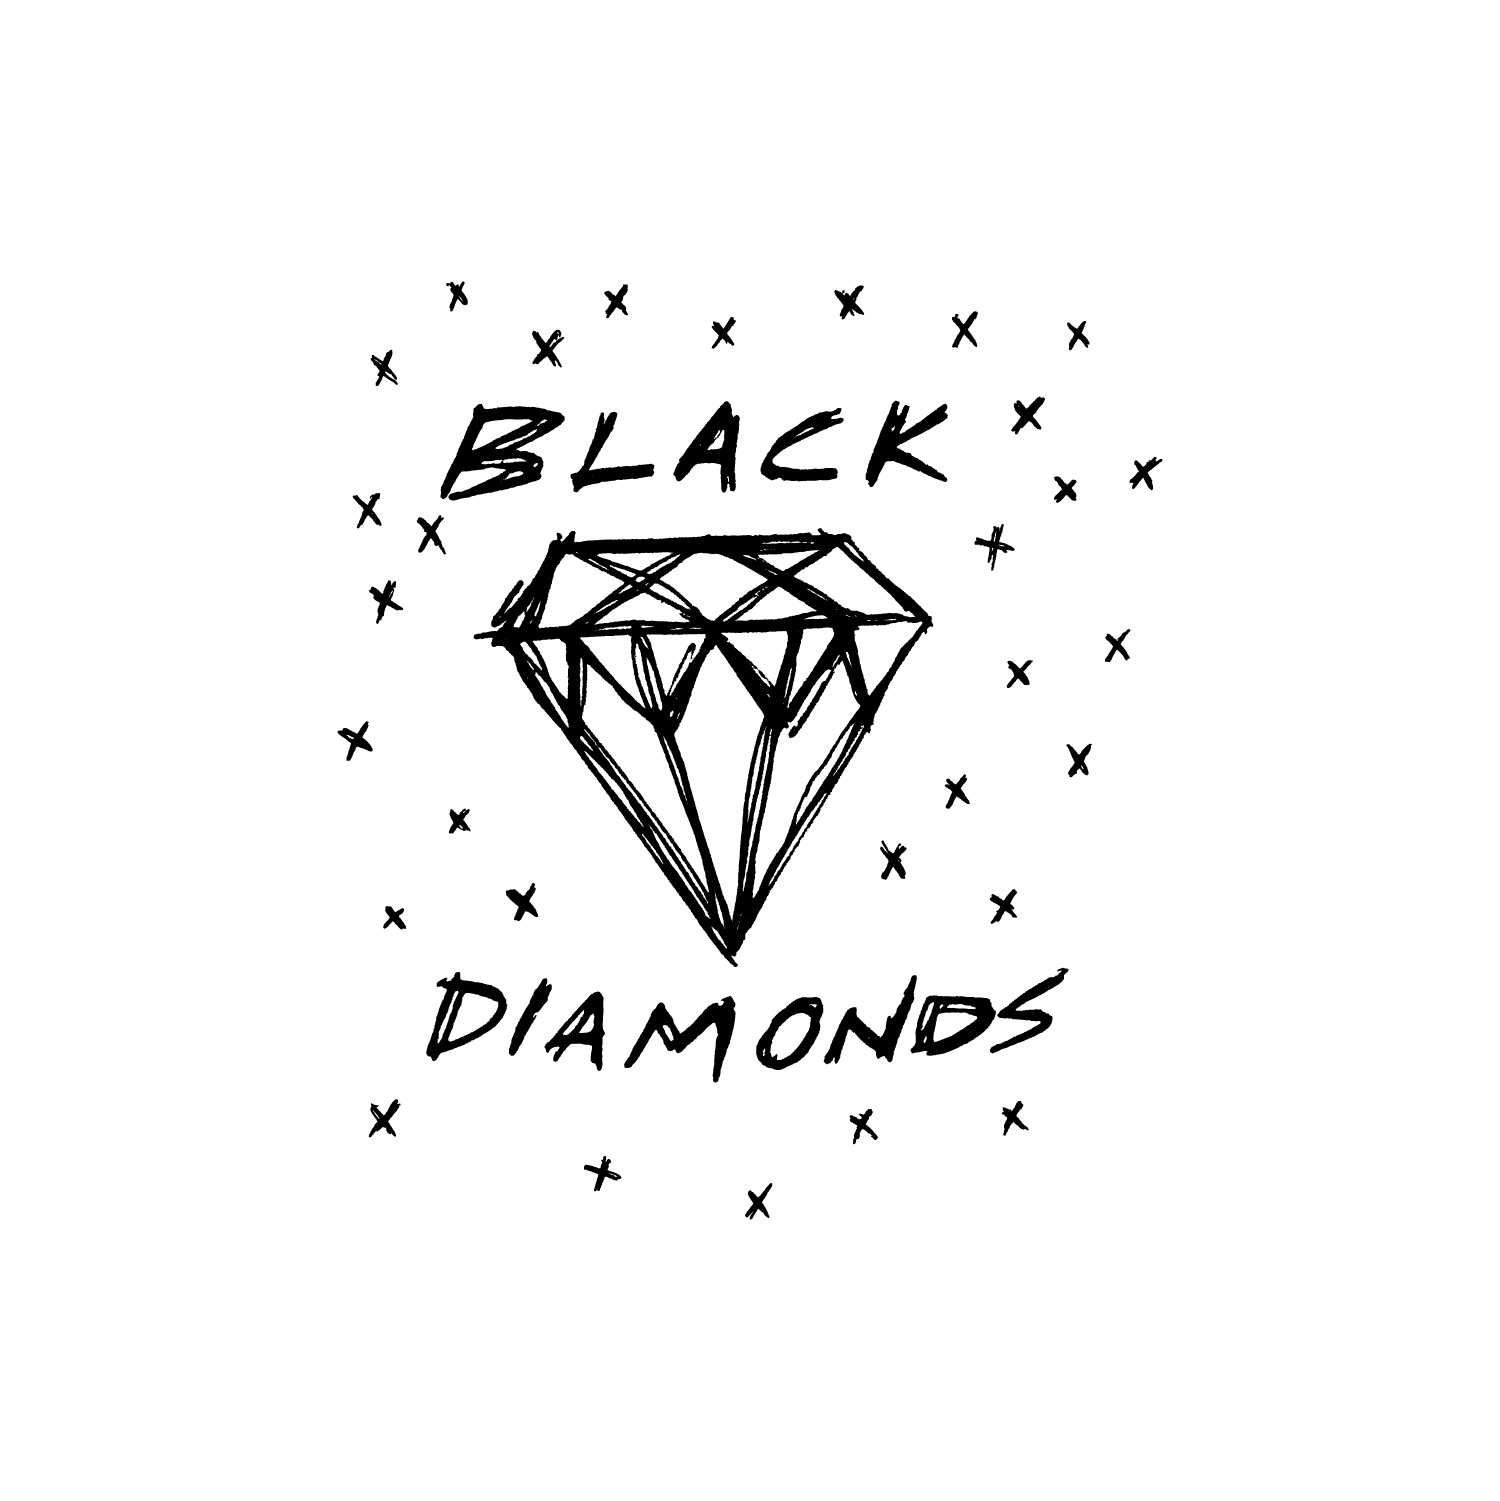 Black Diamonds logo by OLSON MCINTYRE